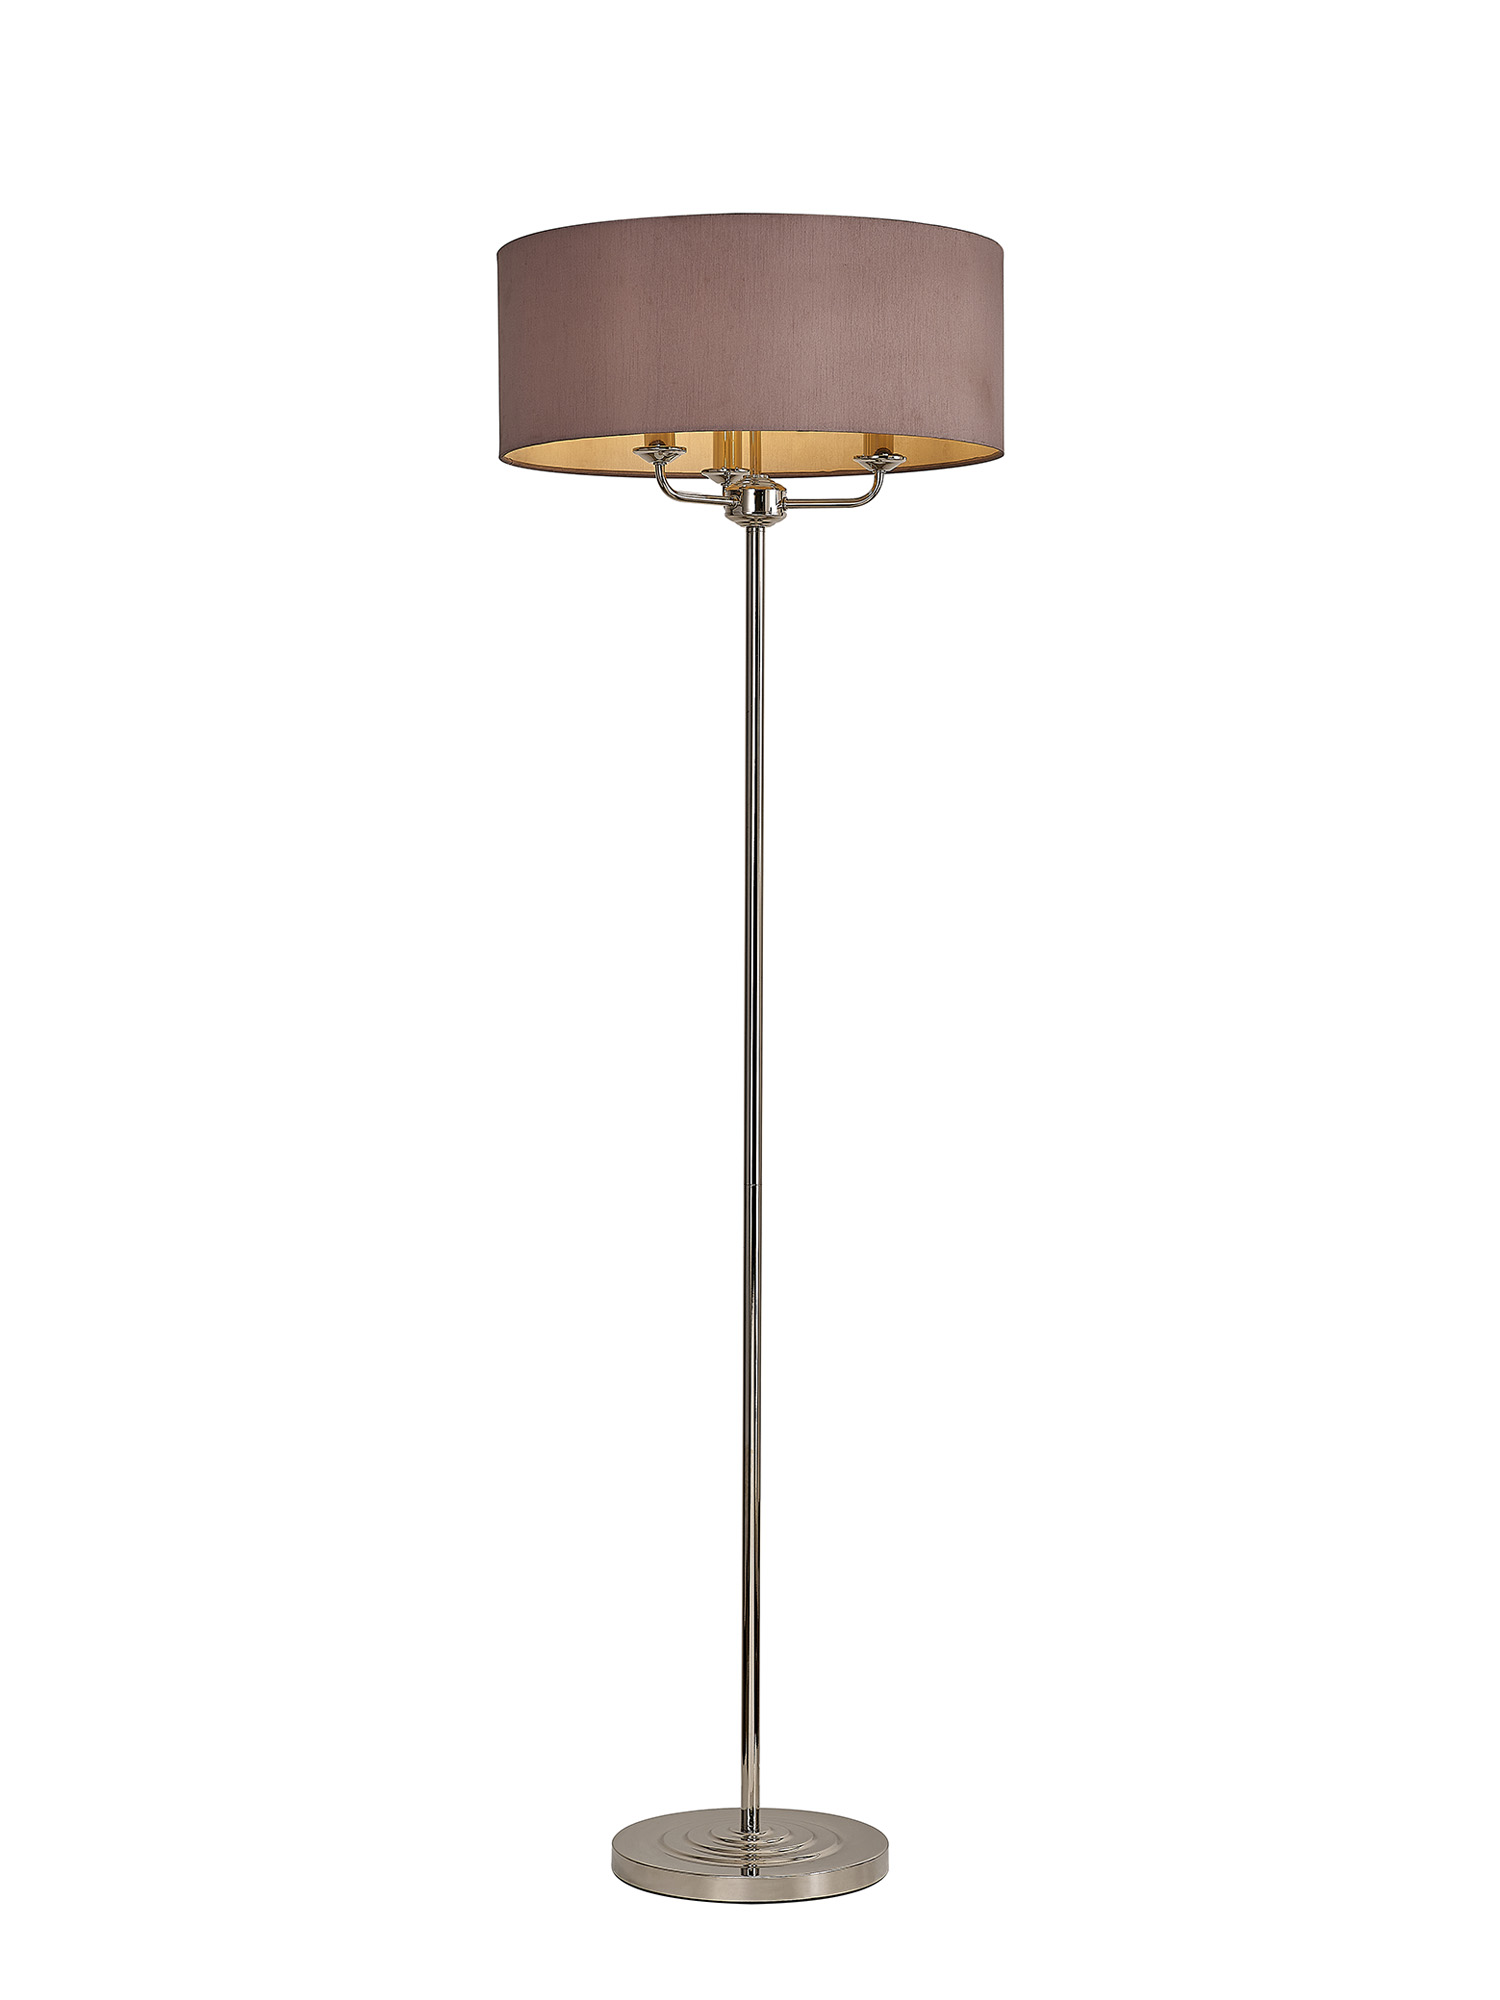 DK0898  Banyan 45cm 3 Light Floor Lamp Polished Nickel, Taupe